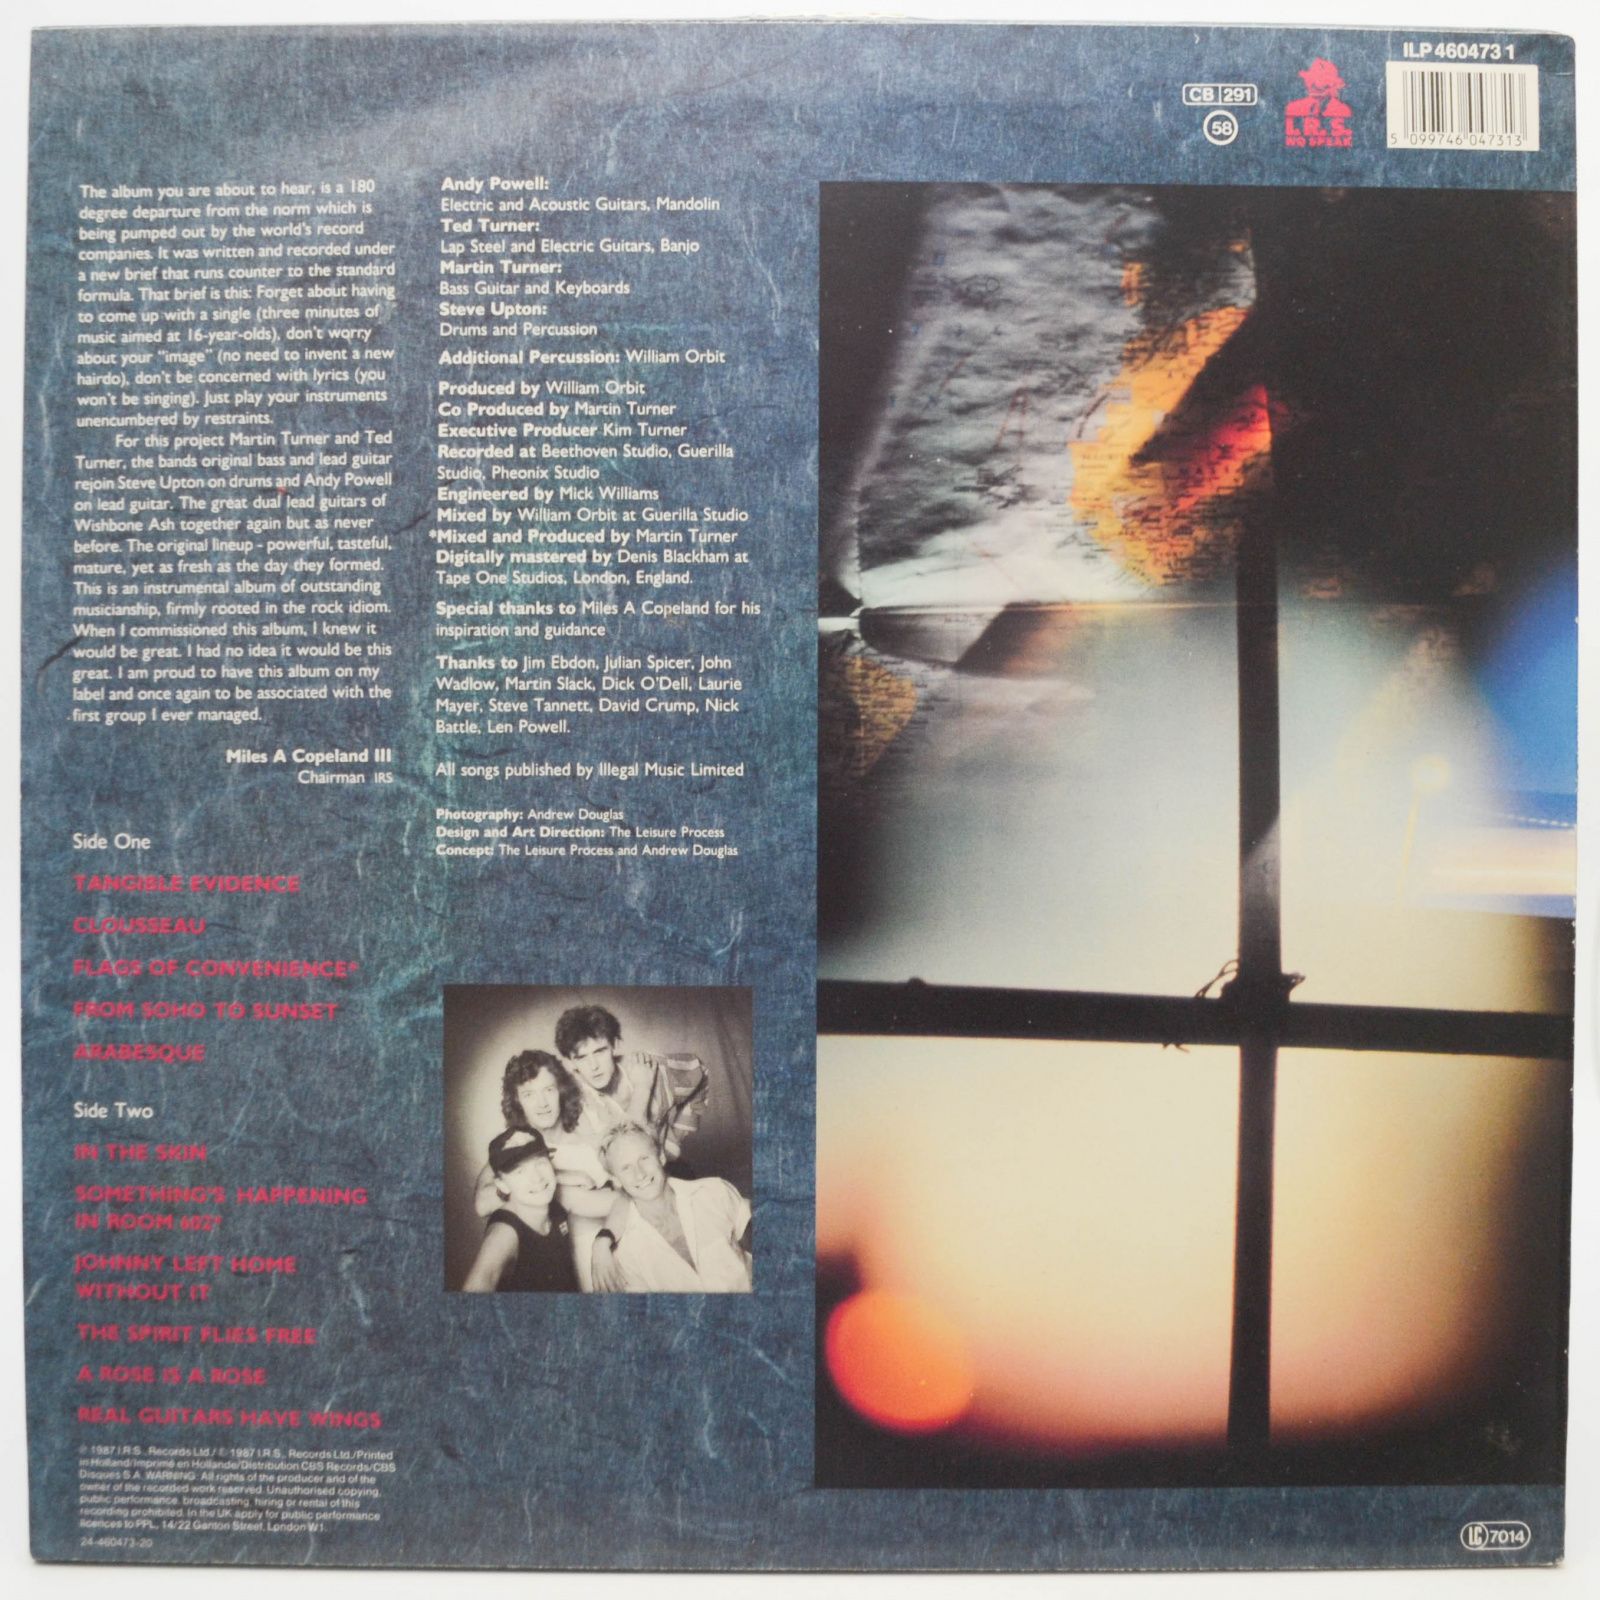 Wishbone Ash — Nouveau Calls, 1987